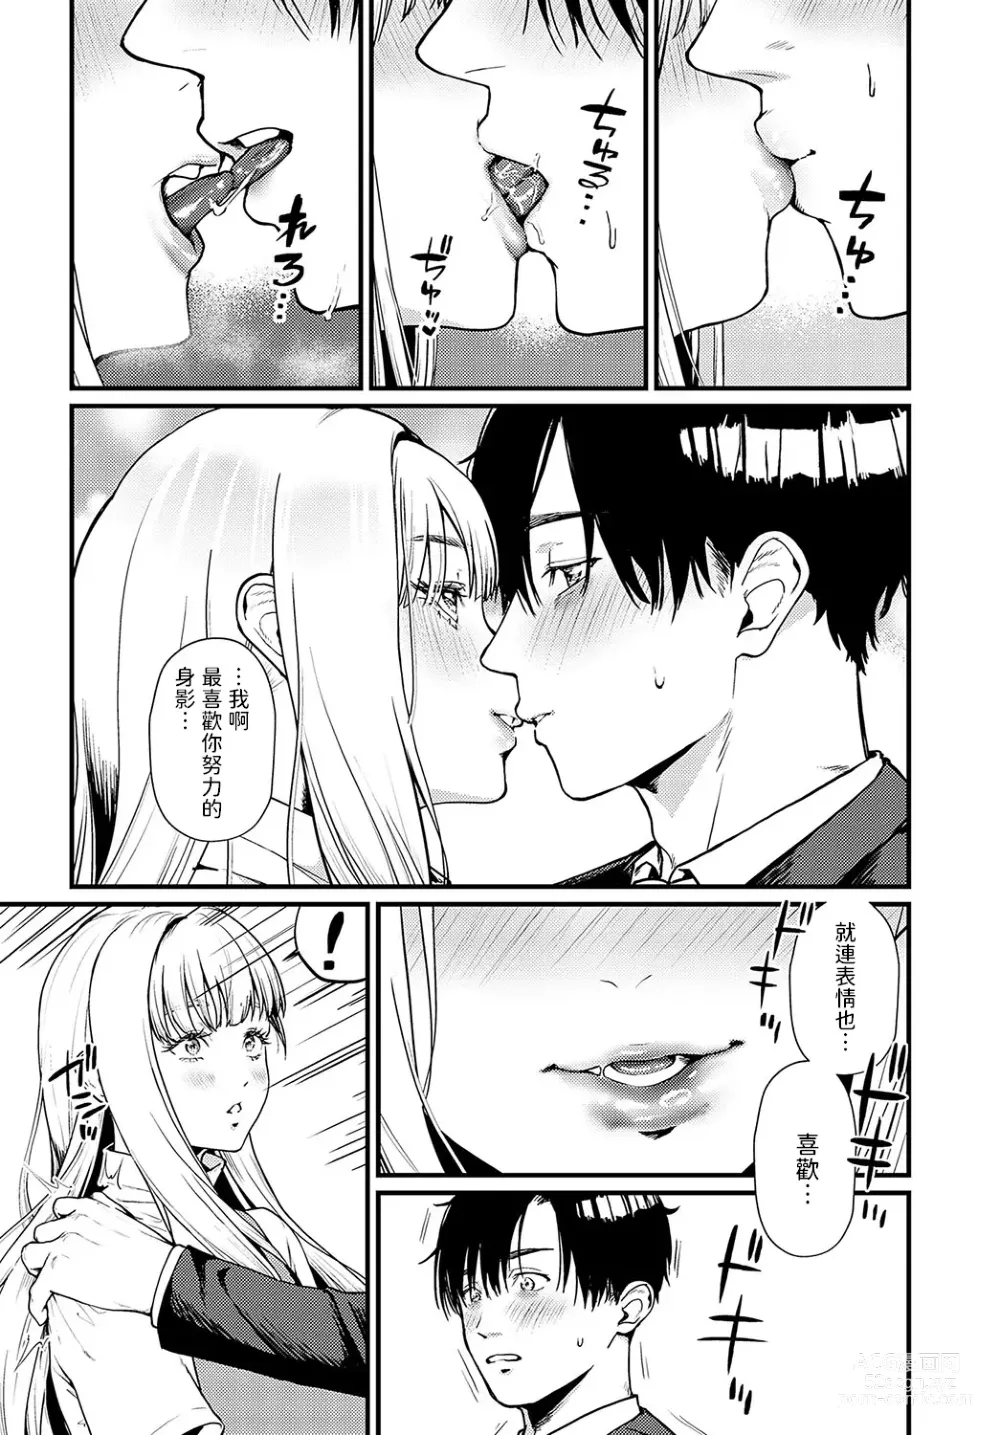 Page 6 of manga Yuuwaku Sweets Home